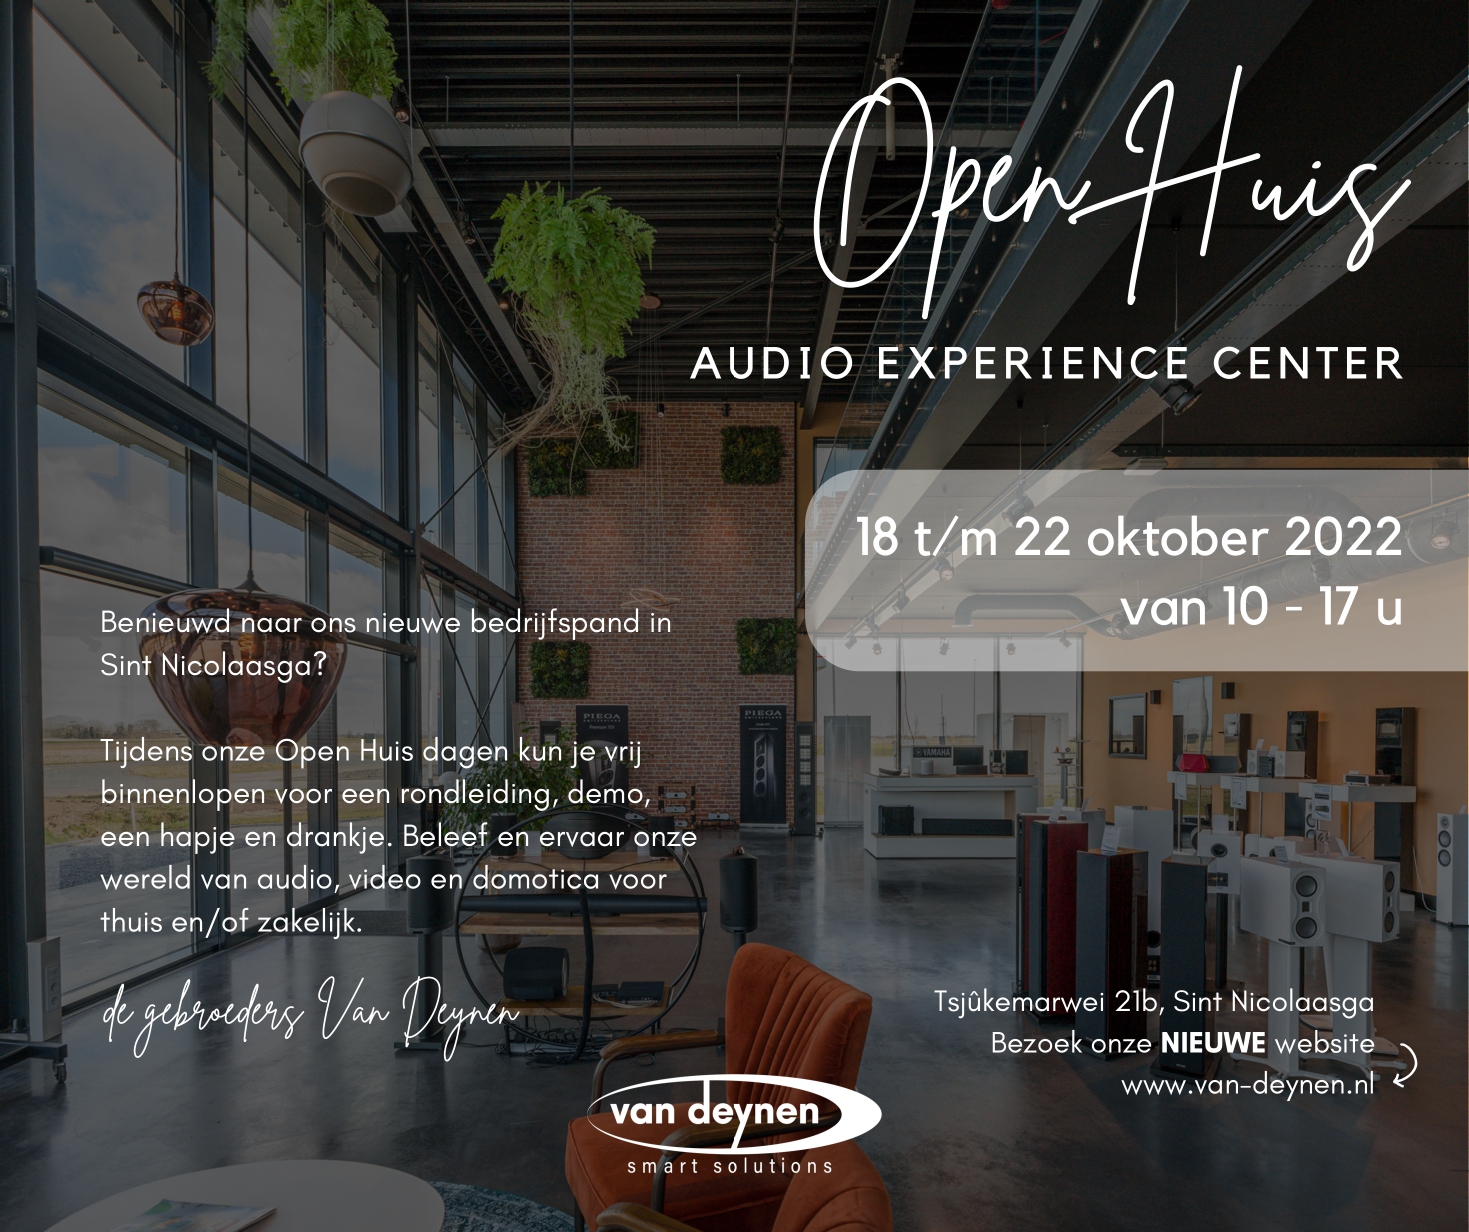 Foto : Open Huis Audio experience center